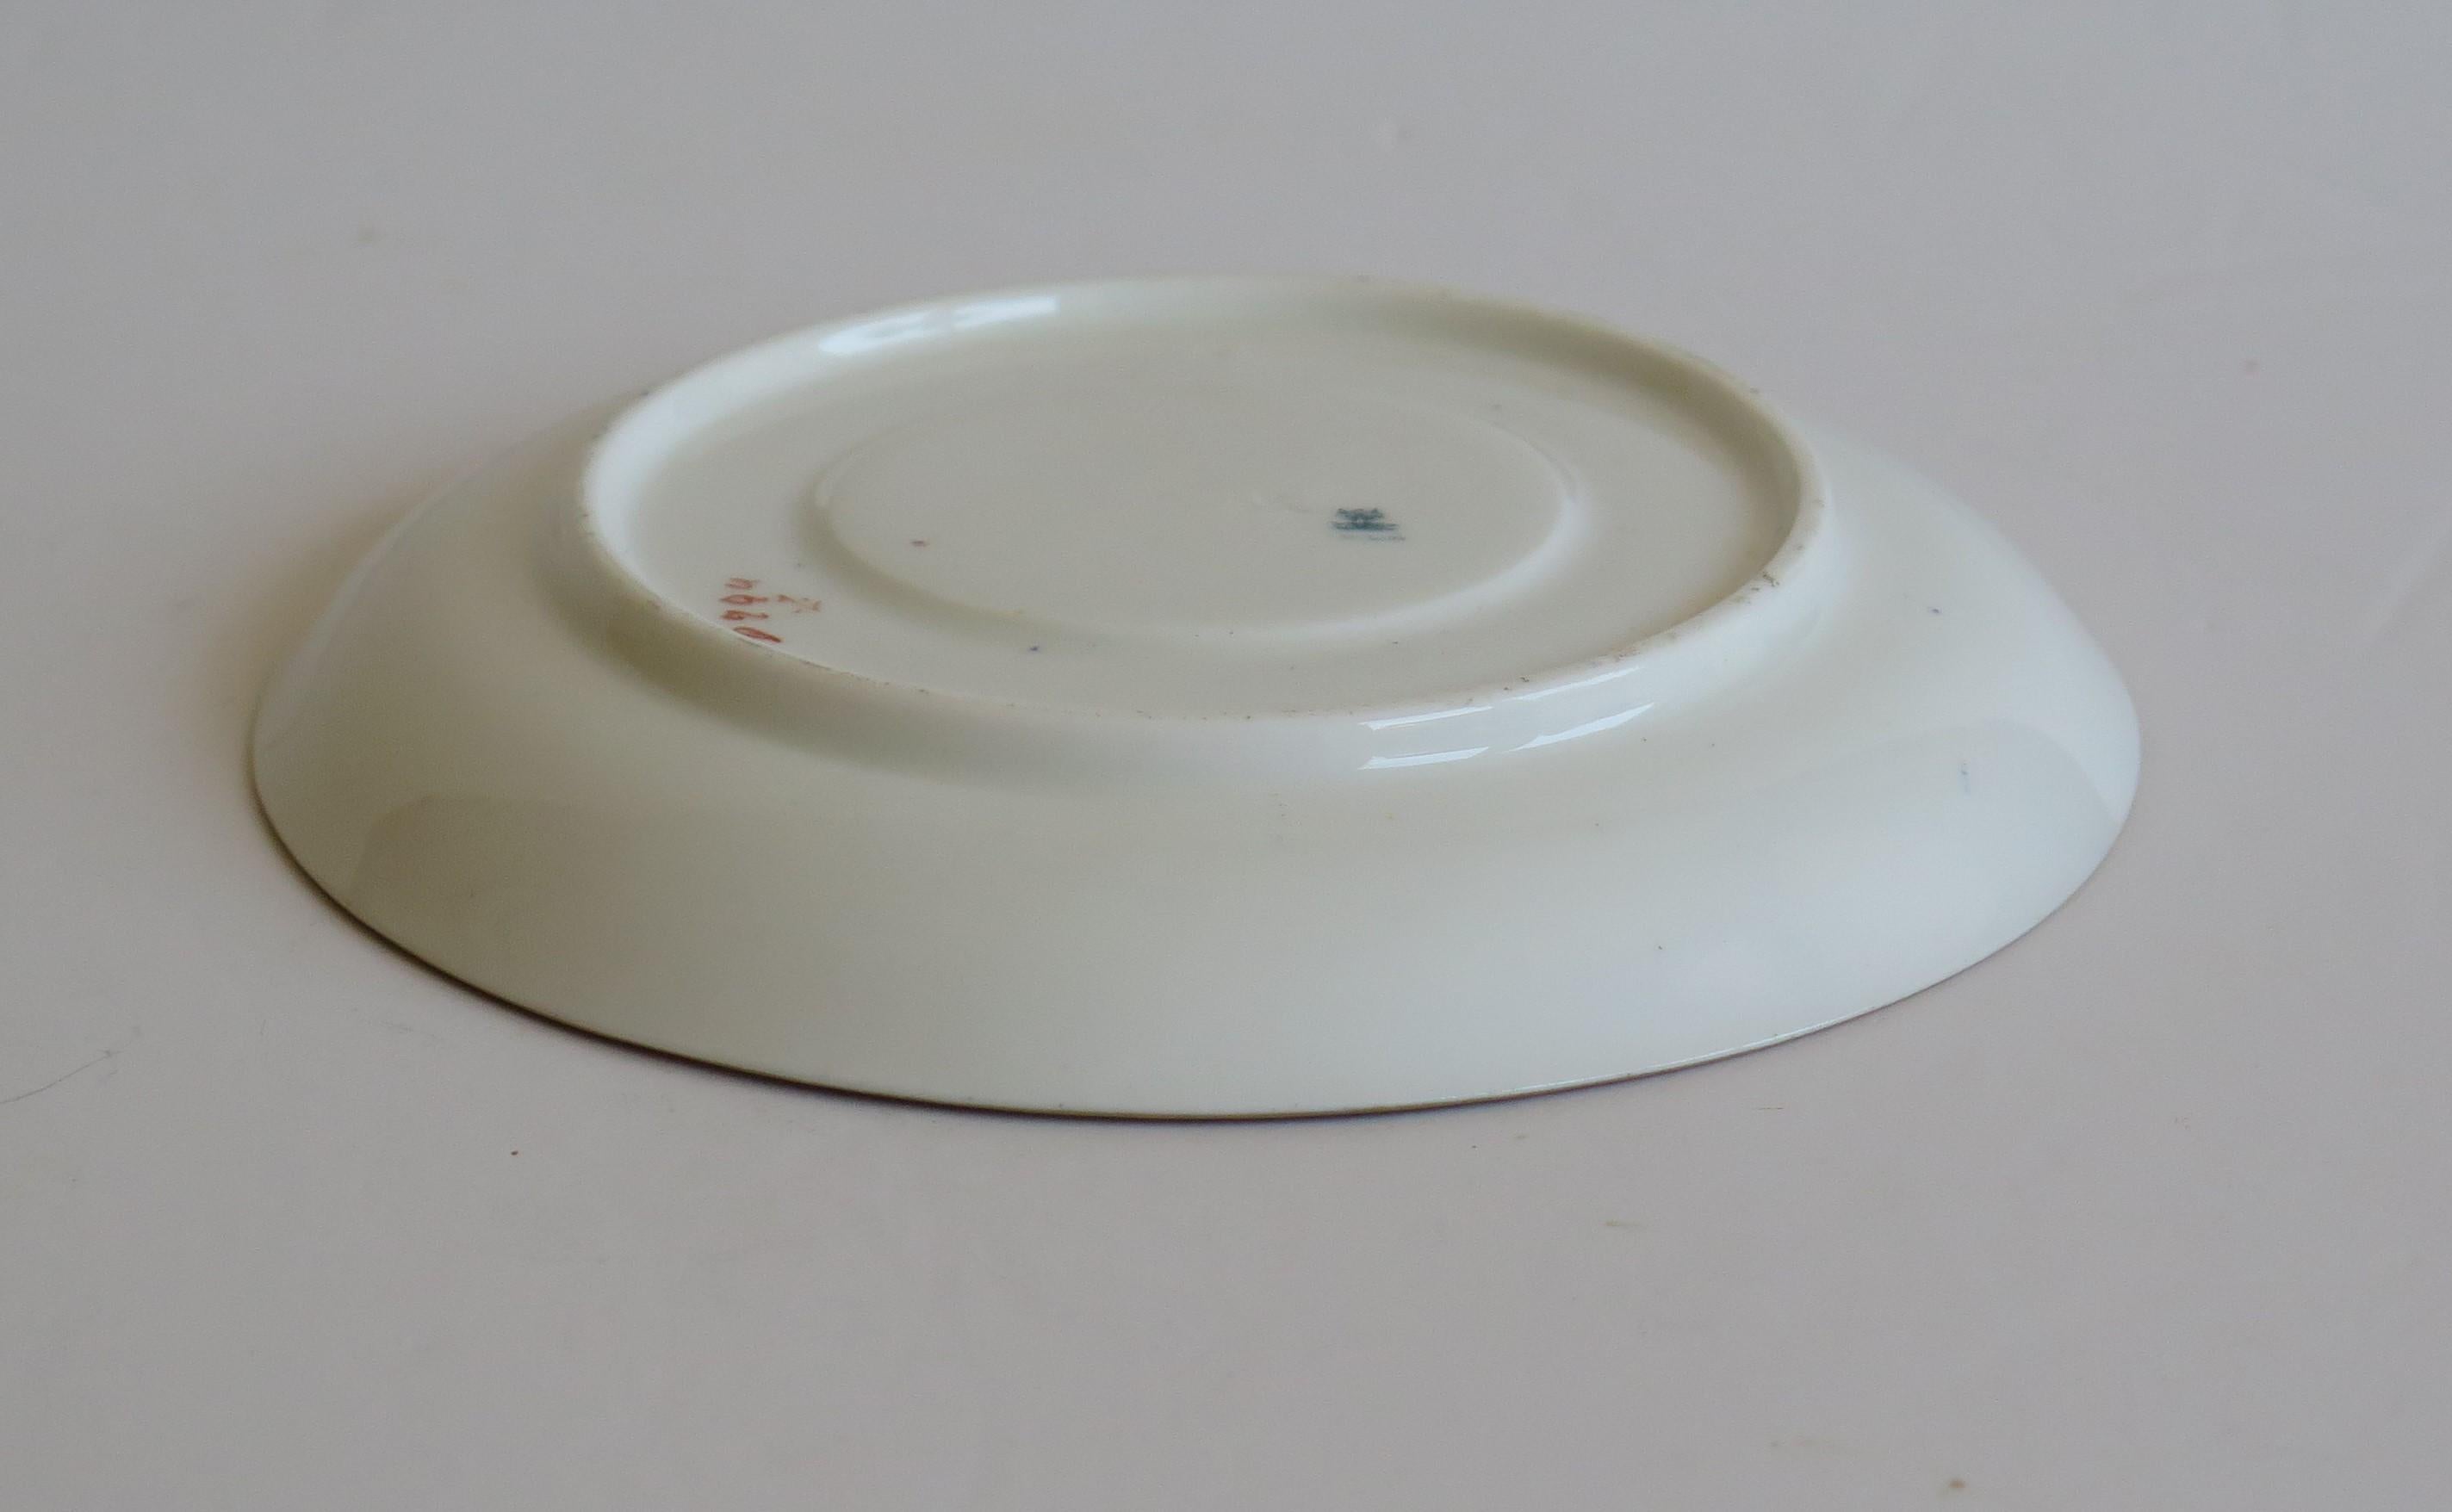 Porcelain Saucer Dish by Copeland 'Spode' in Imari Fence Ptn No. 794, circa 1850 3